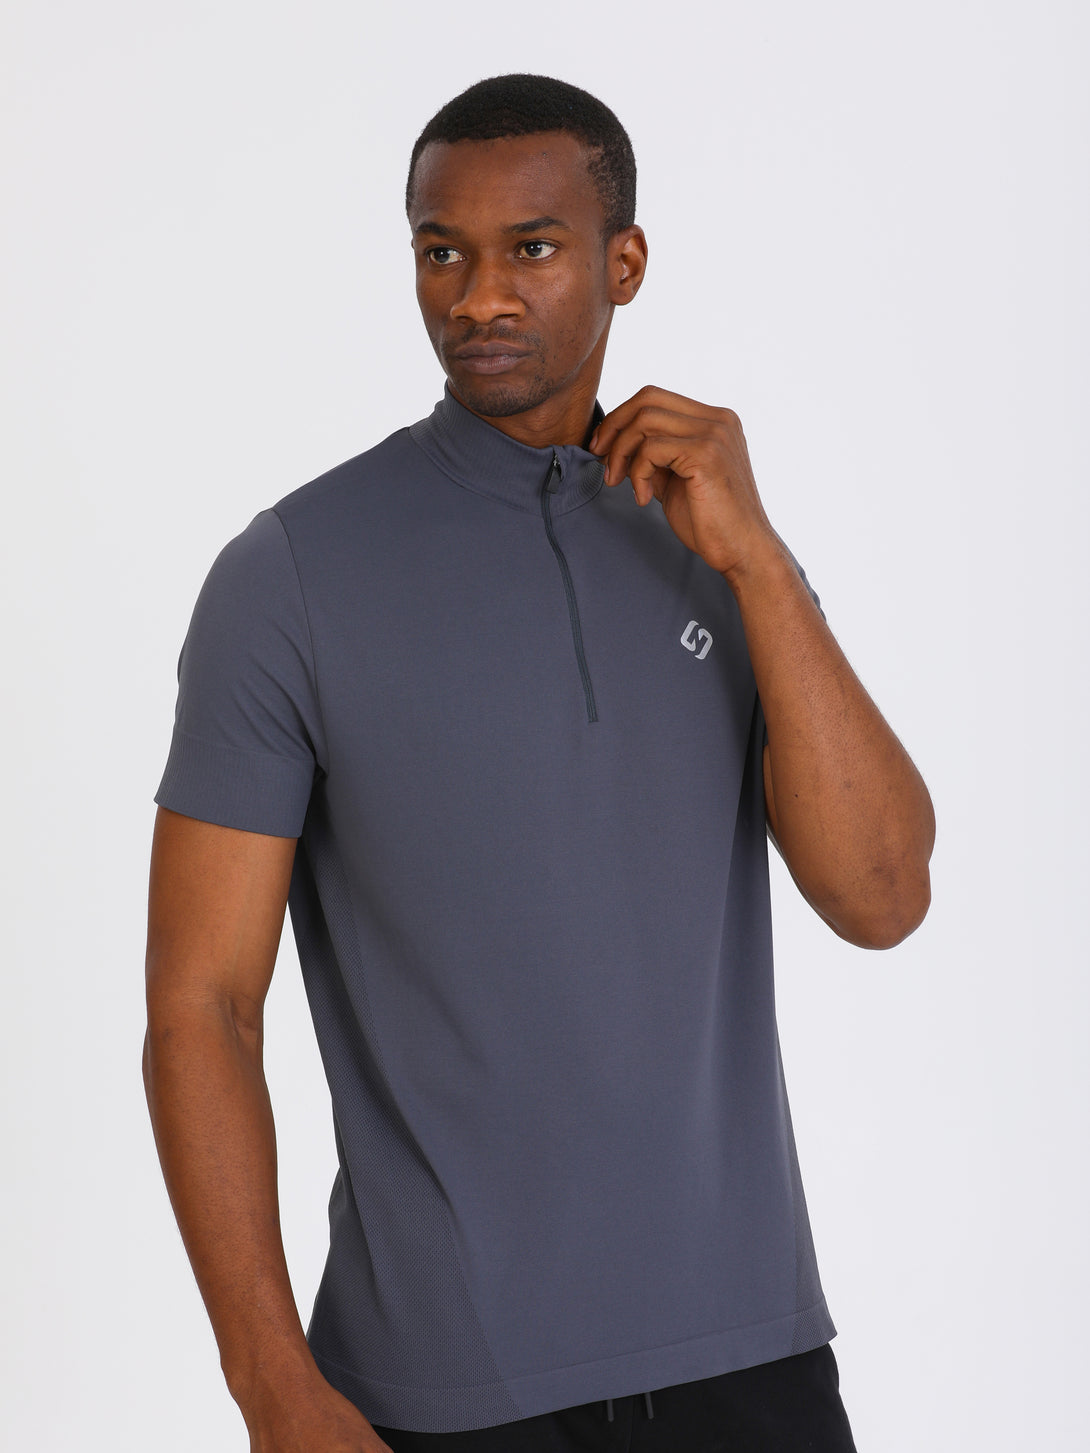 A Man Wearing Ebony Color Seamless Short Sleeve Zipped T-Shirt